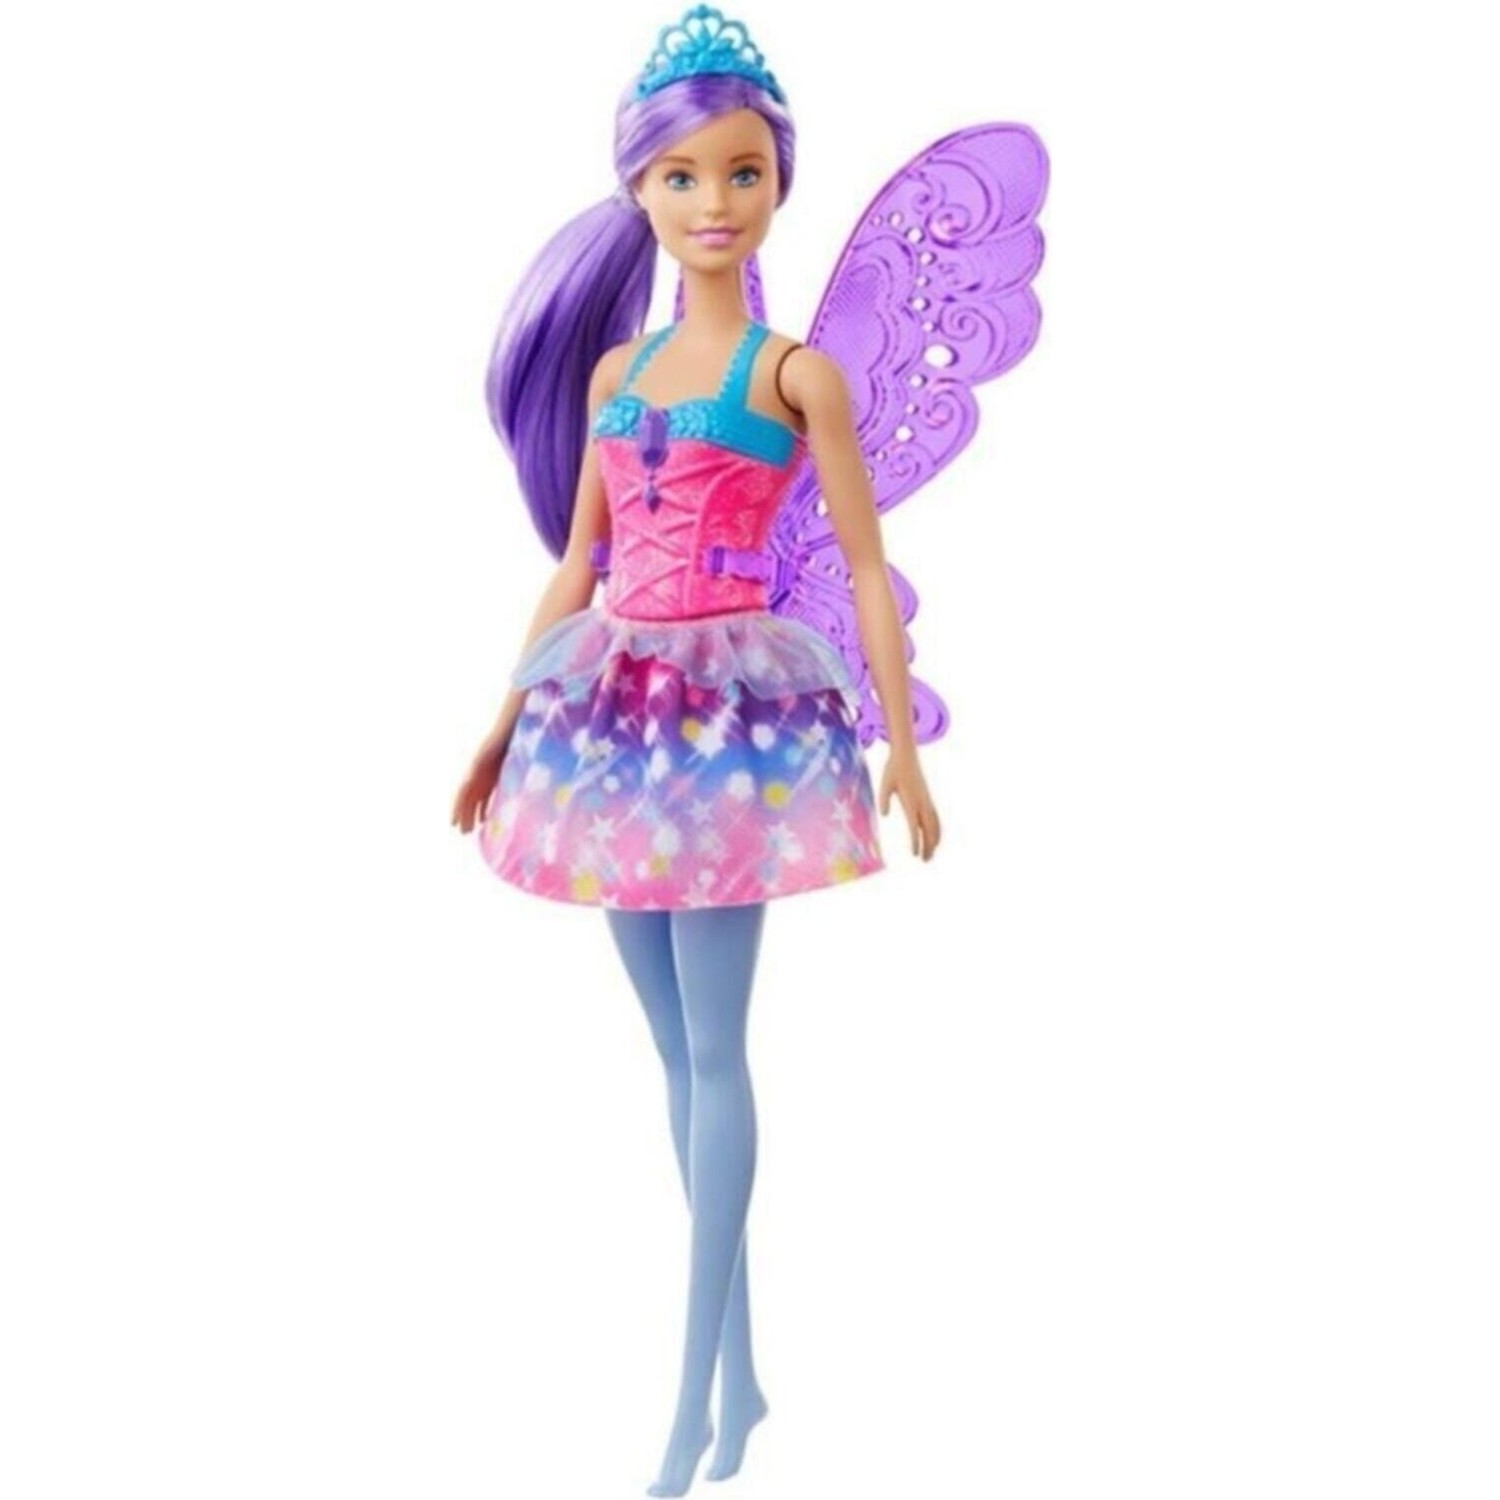 Куклы Barbie Dreamtopia Fairy Dolls красочное розовое платье, фиолетовые волосы GJK00 кукла barbie dreamtopia mermaid fjc92